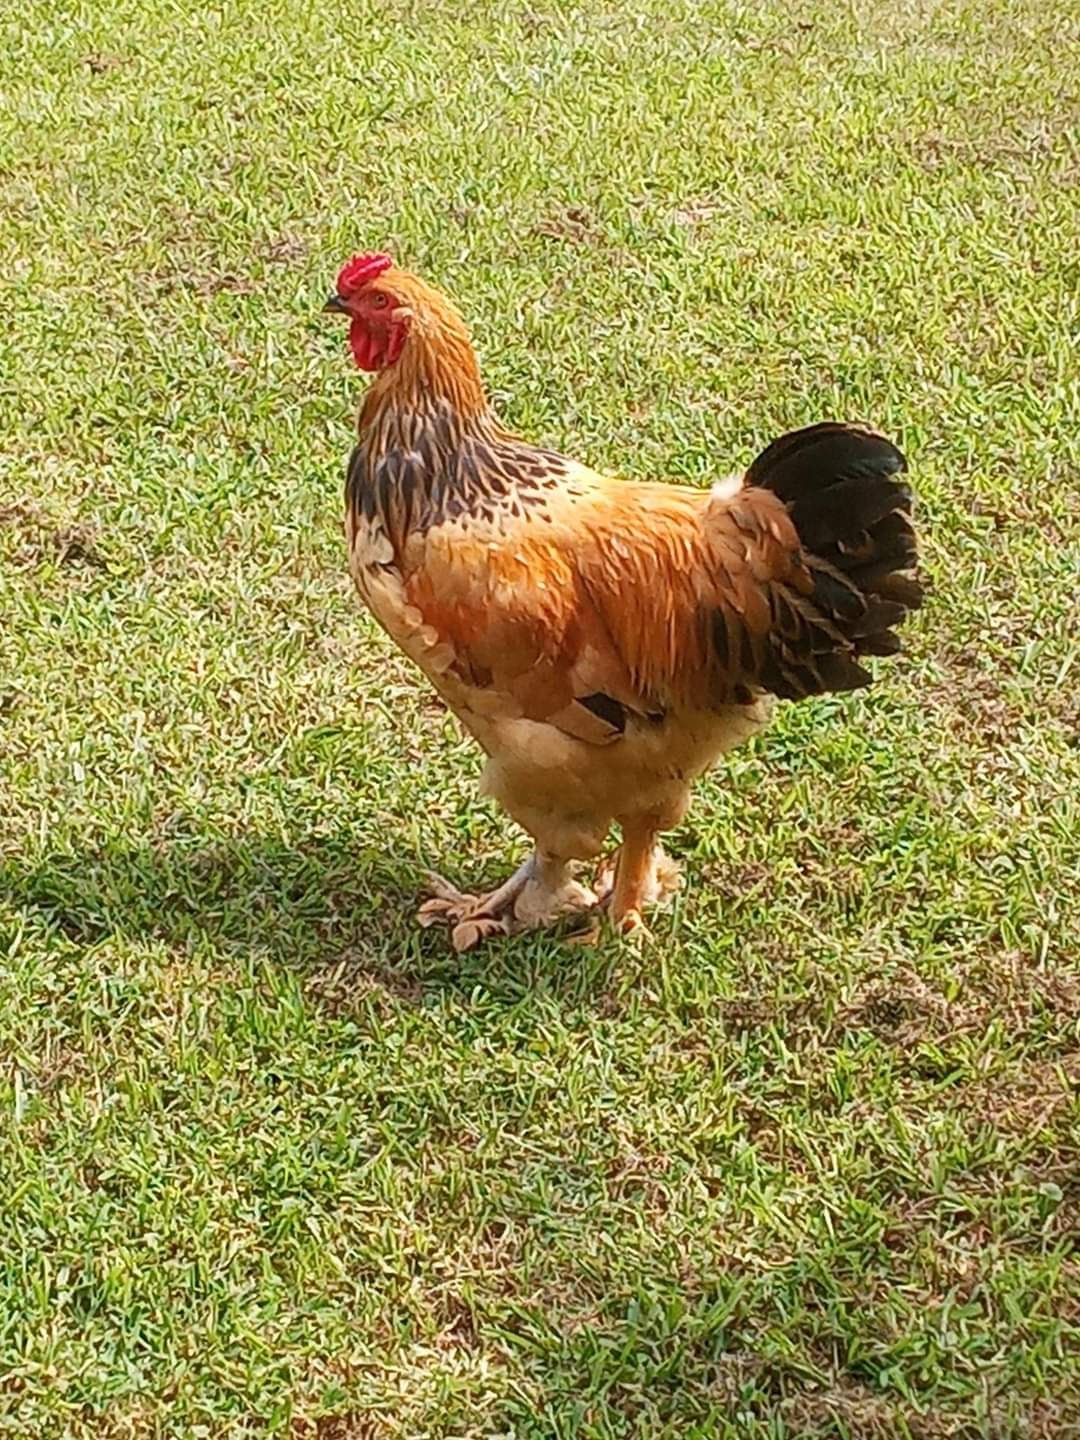 Giant Brahma Chicken around 6months old already over 5 pounds